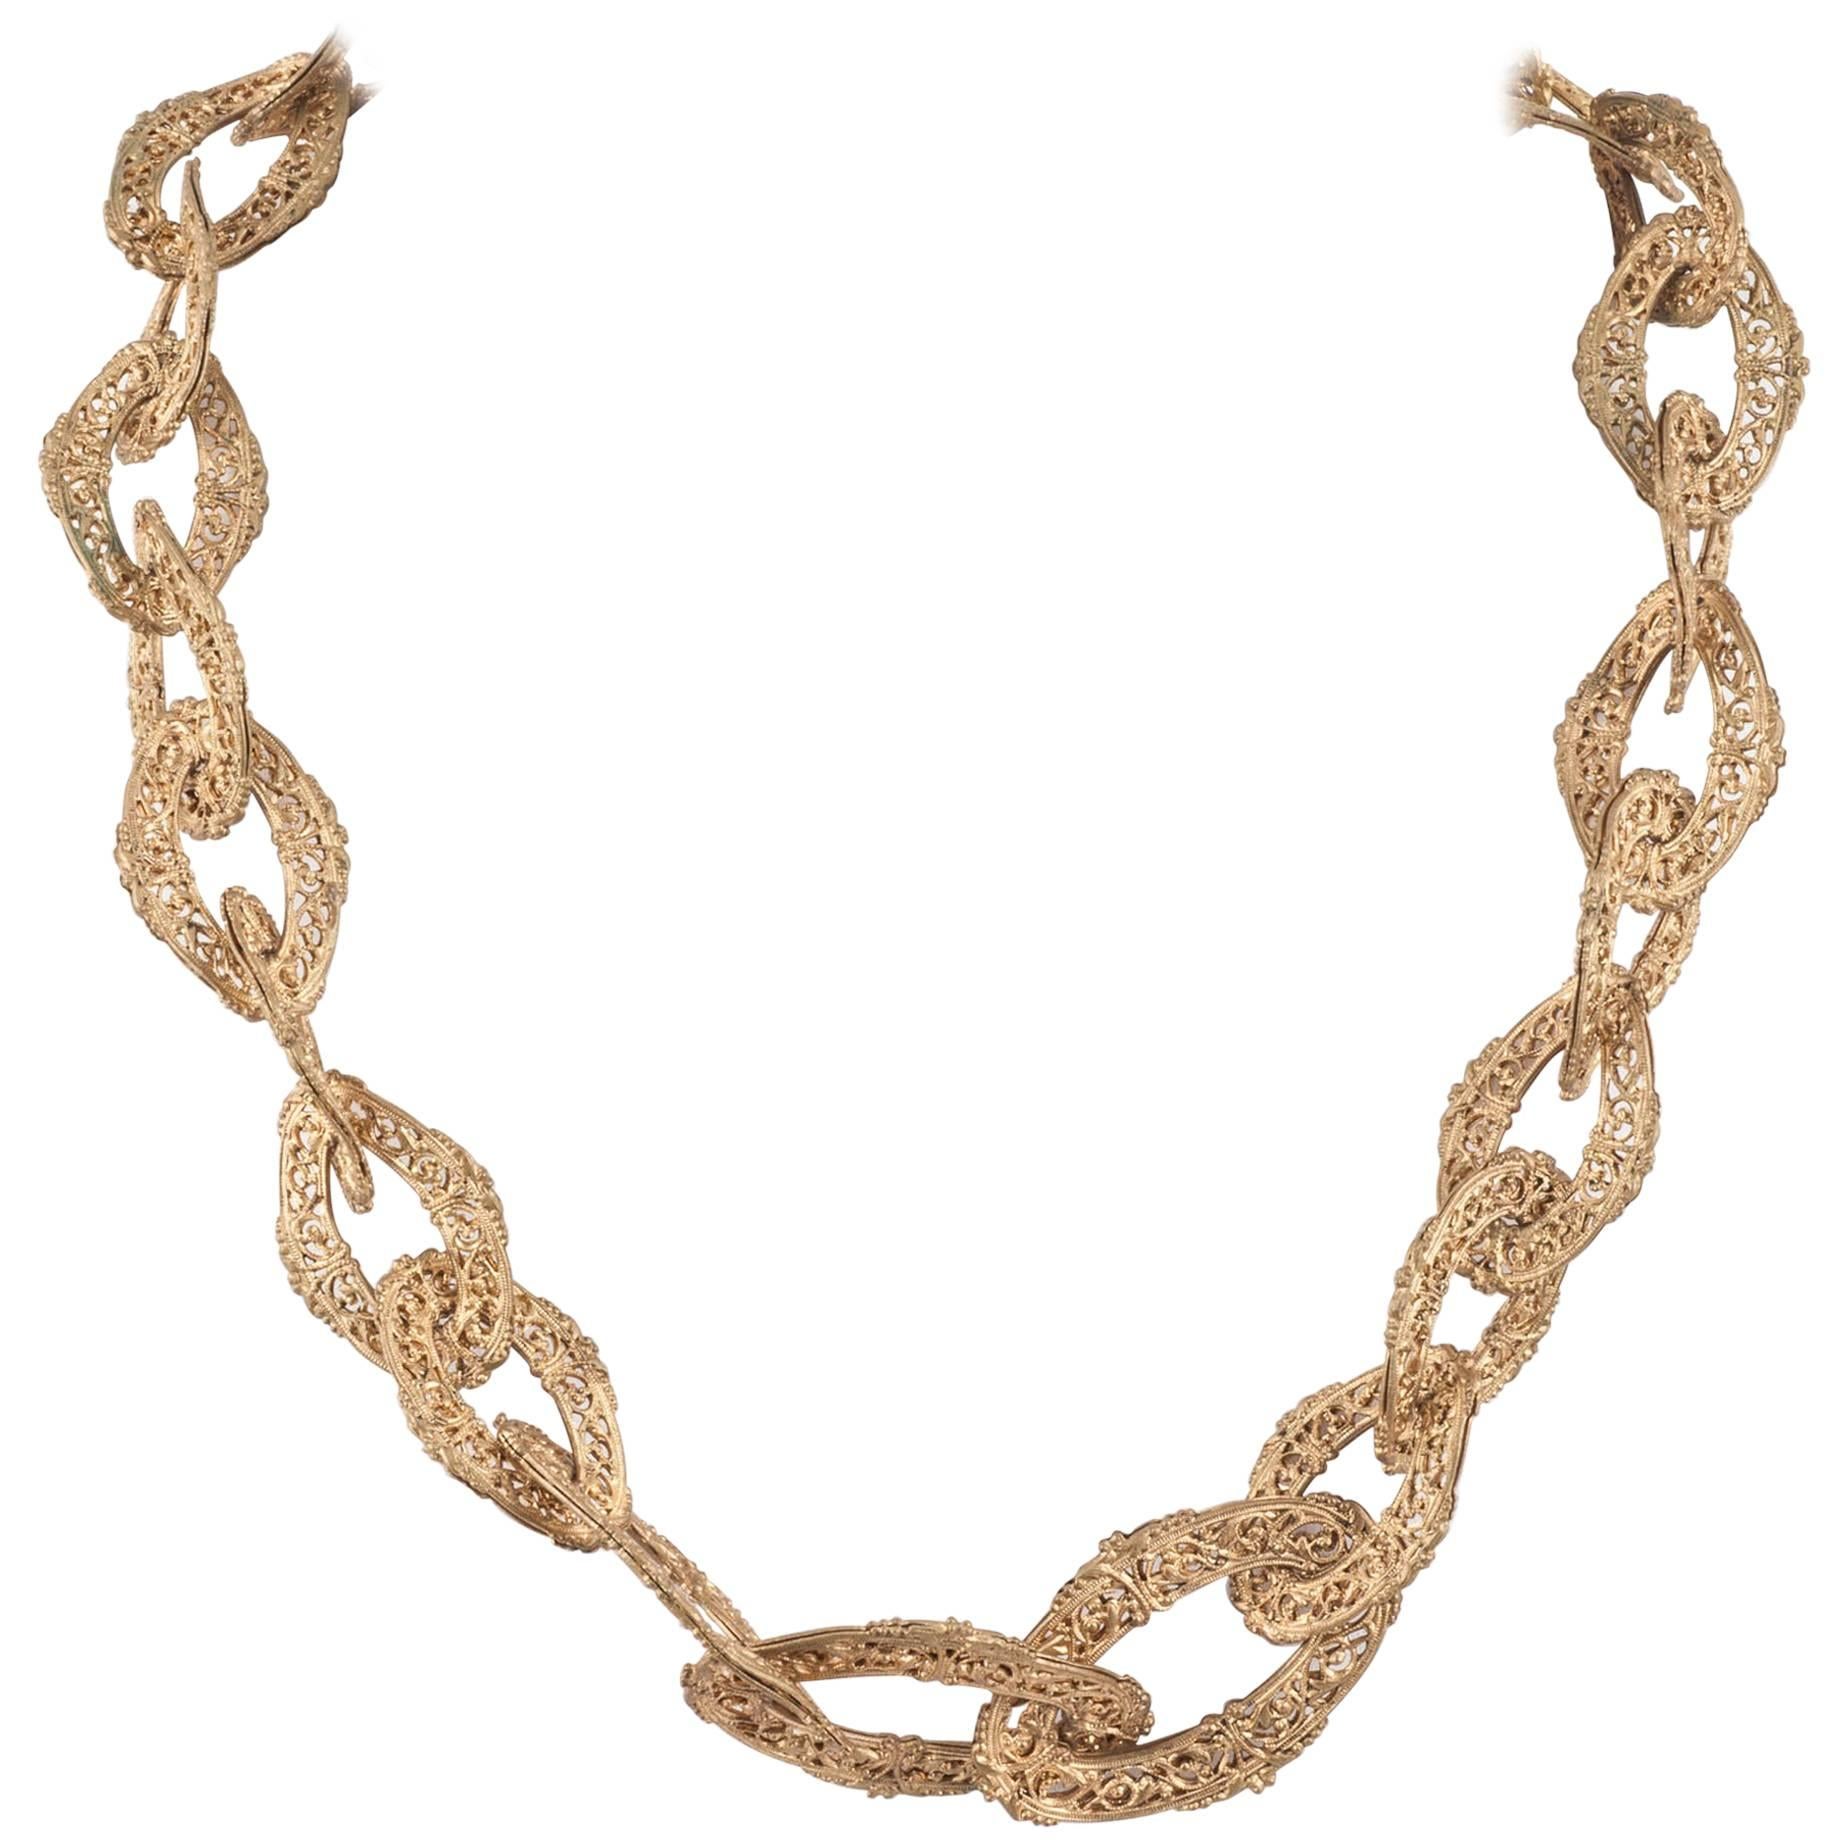 Große antike goldene filigrane Gliederkette, Goossens für Chanel, 1960er Jahre.